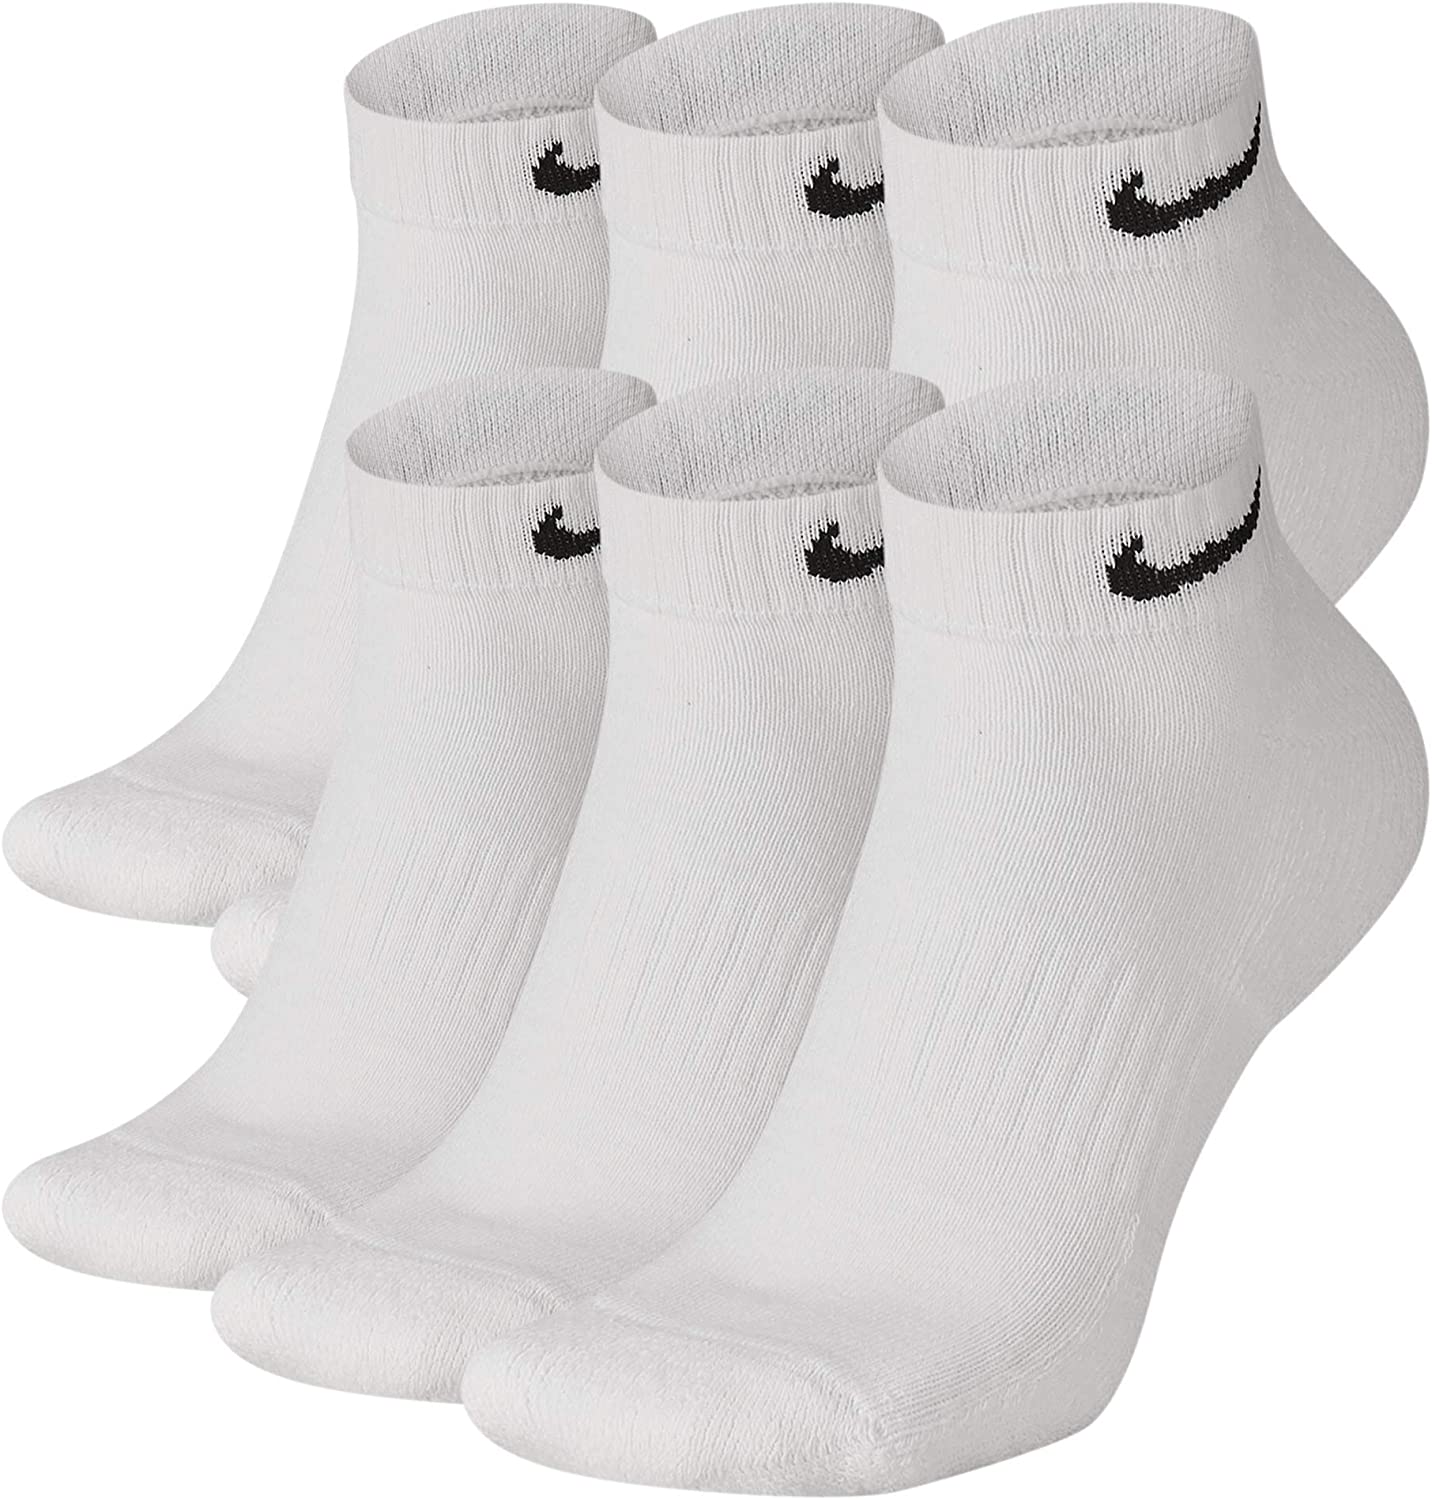 Nike Everyday Terry Soled Low Socks, 6-Pair